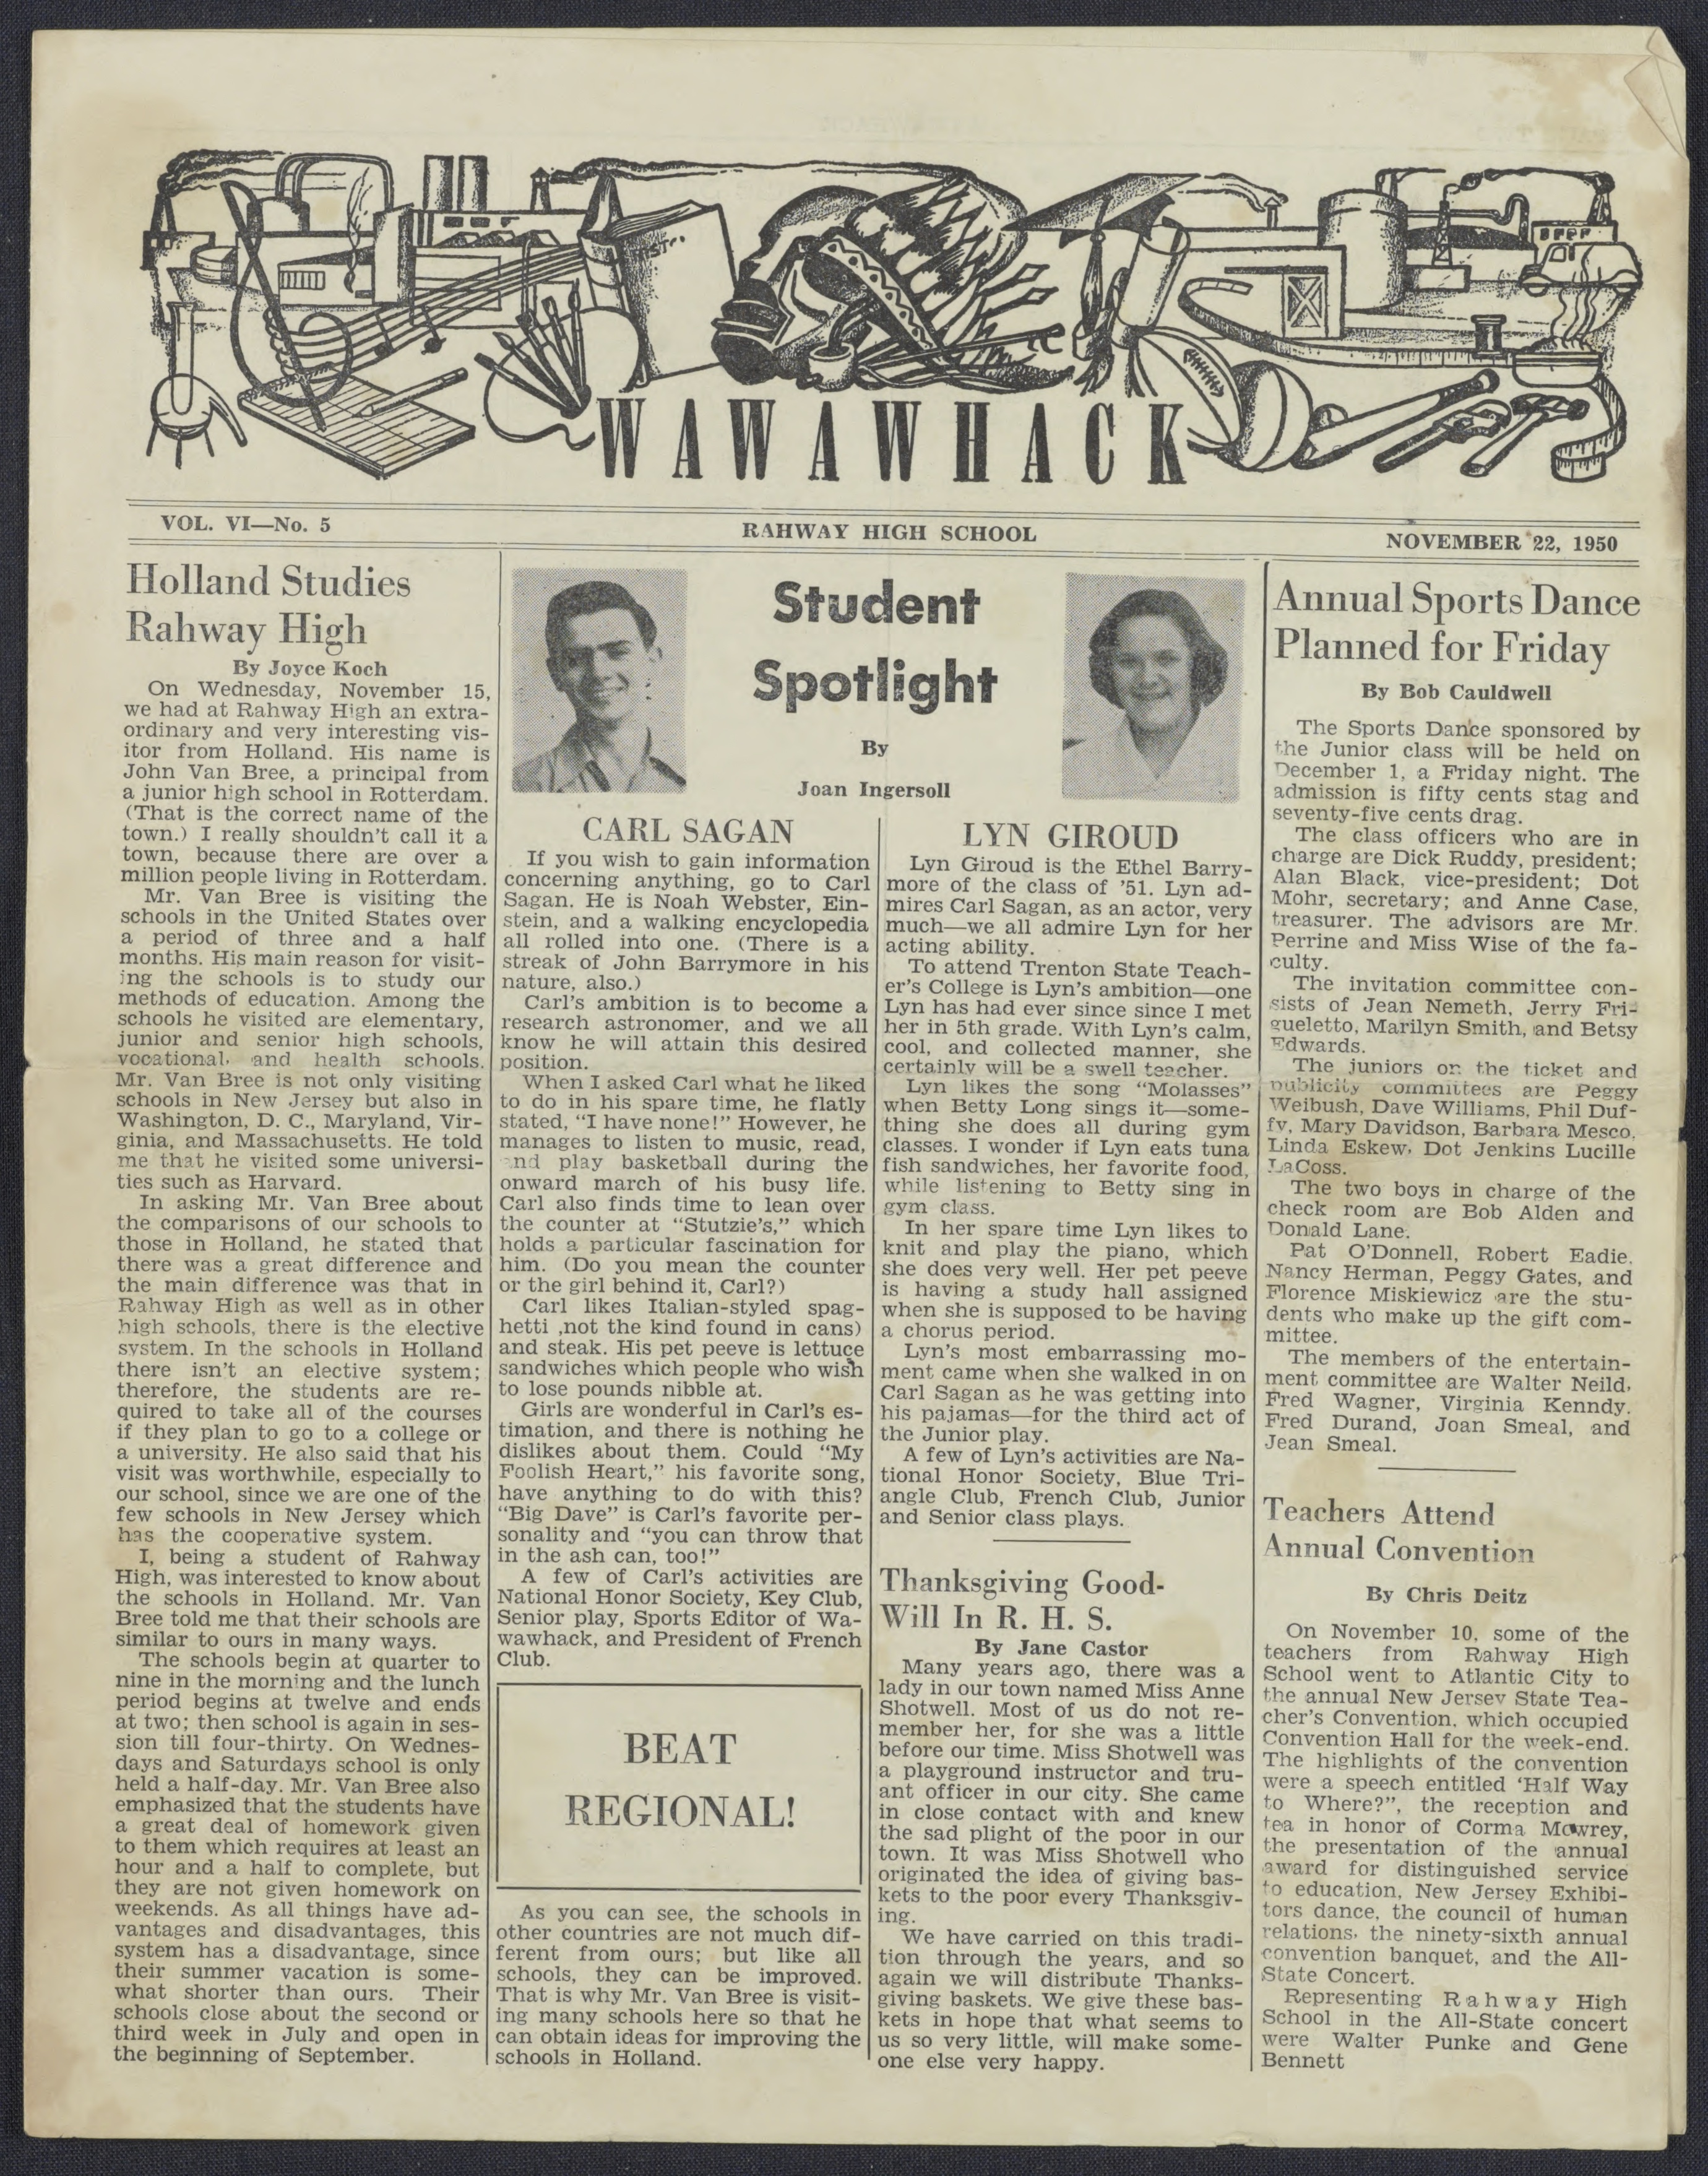 Wawawhack, the Rahway High School student newspaper, Vol. VI, No. 5.